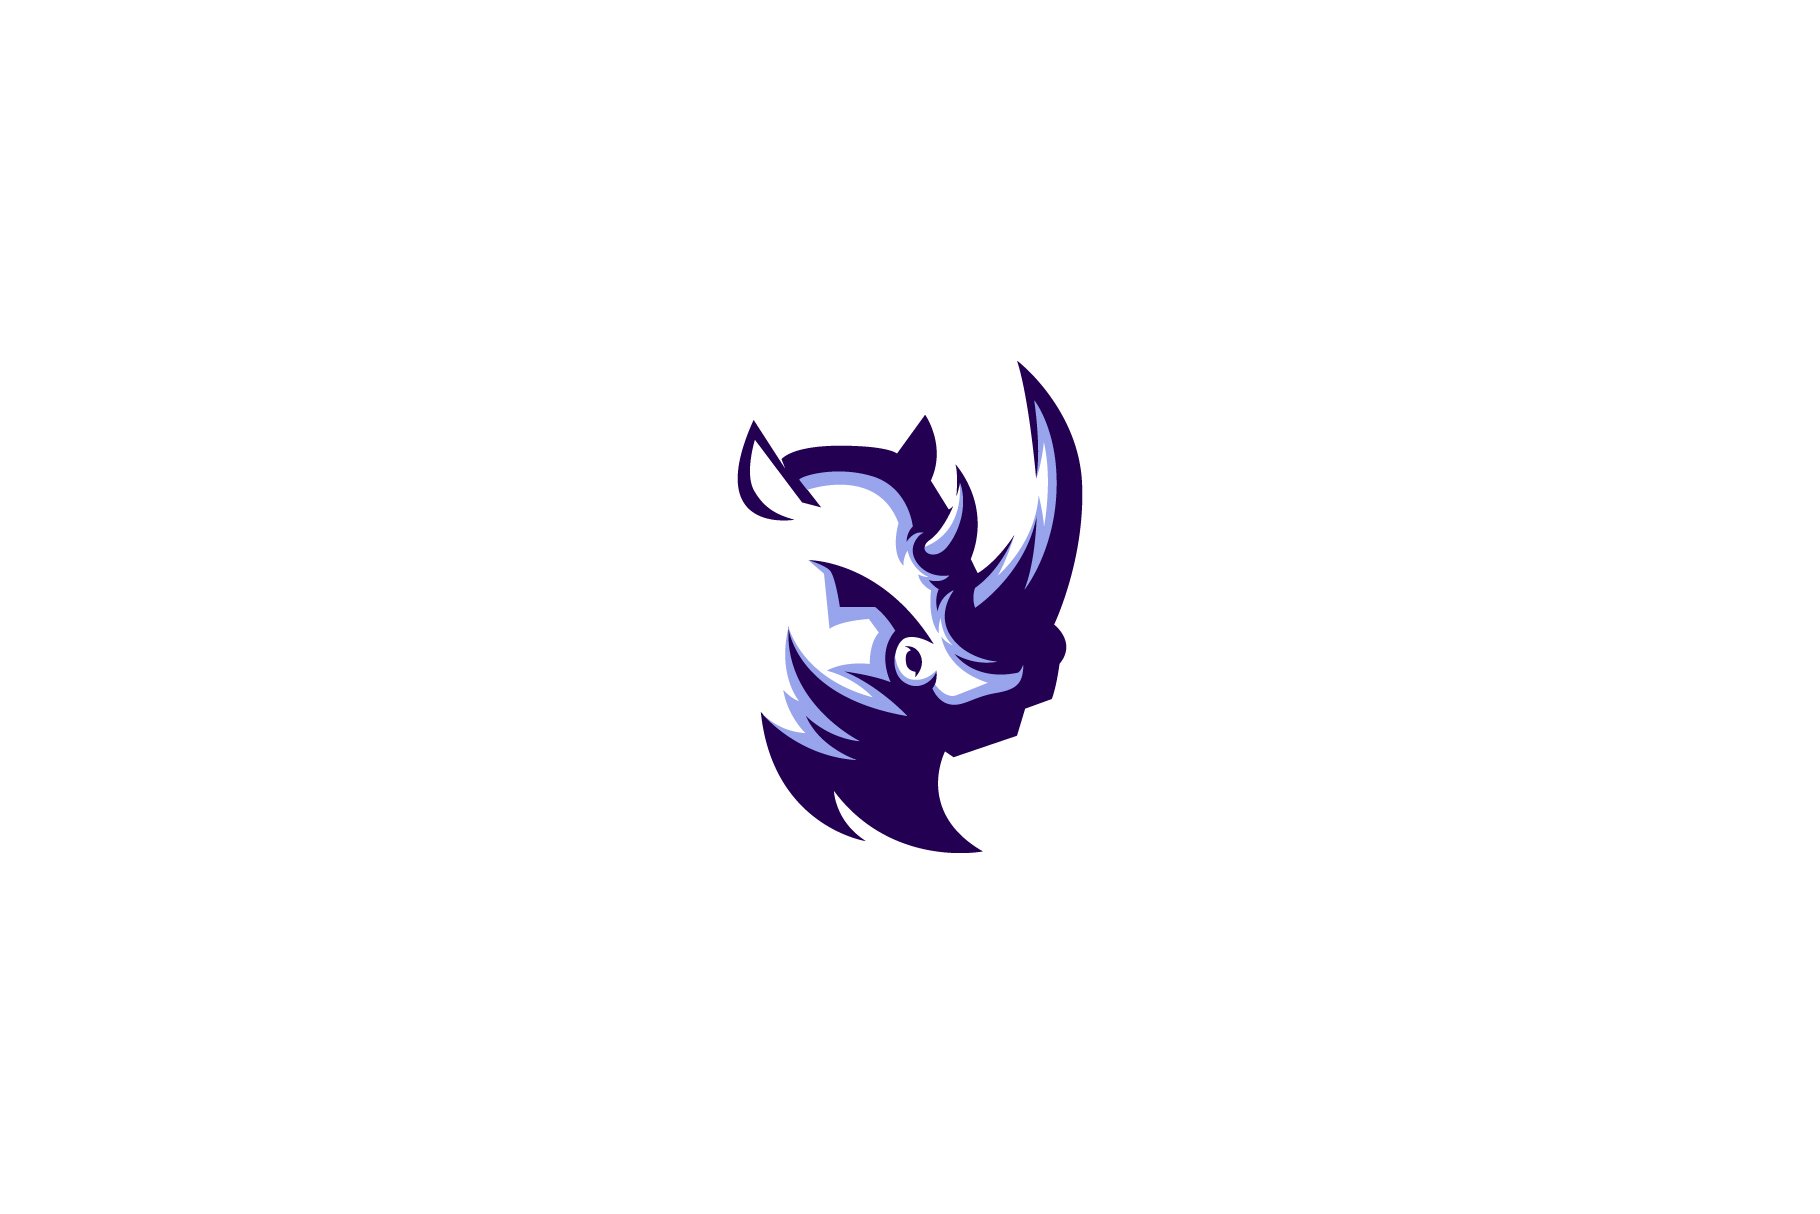 Minimalistic rhino logo.